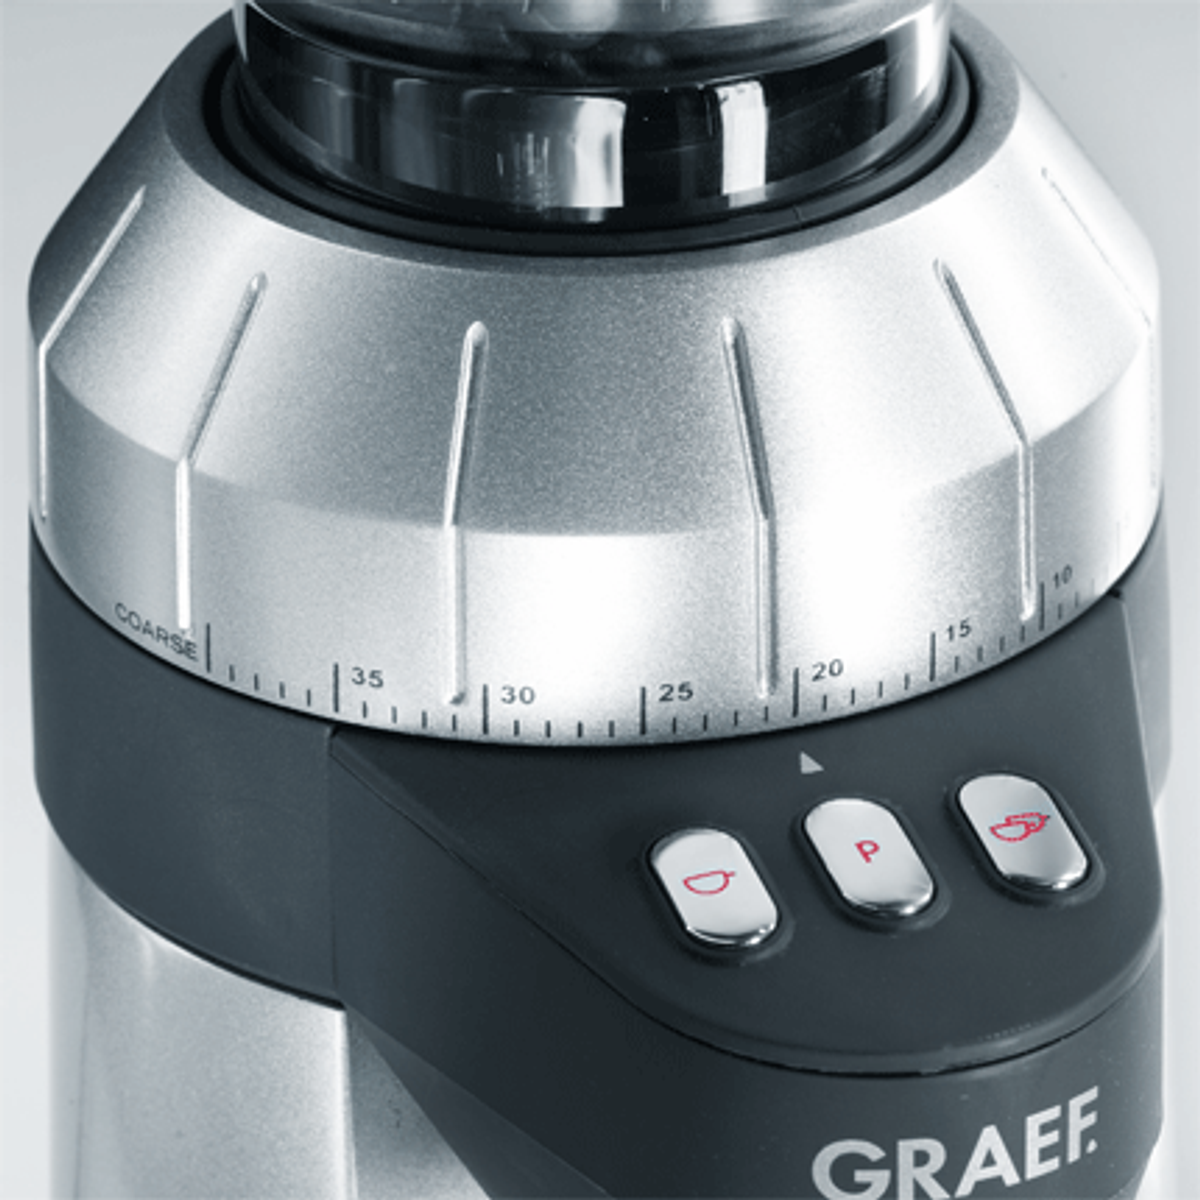 Edelstahl-Kegelmahlwerk) EU GRAEF 900 Silber Watt, KAFFEEMÜHLE CM Kaffeemühle (128